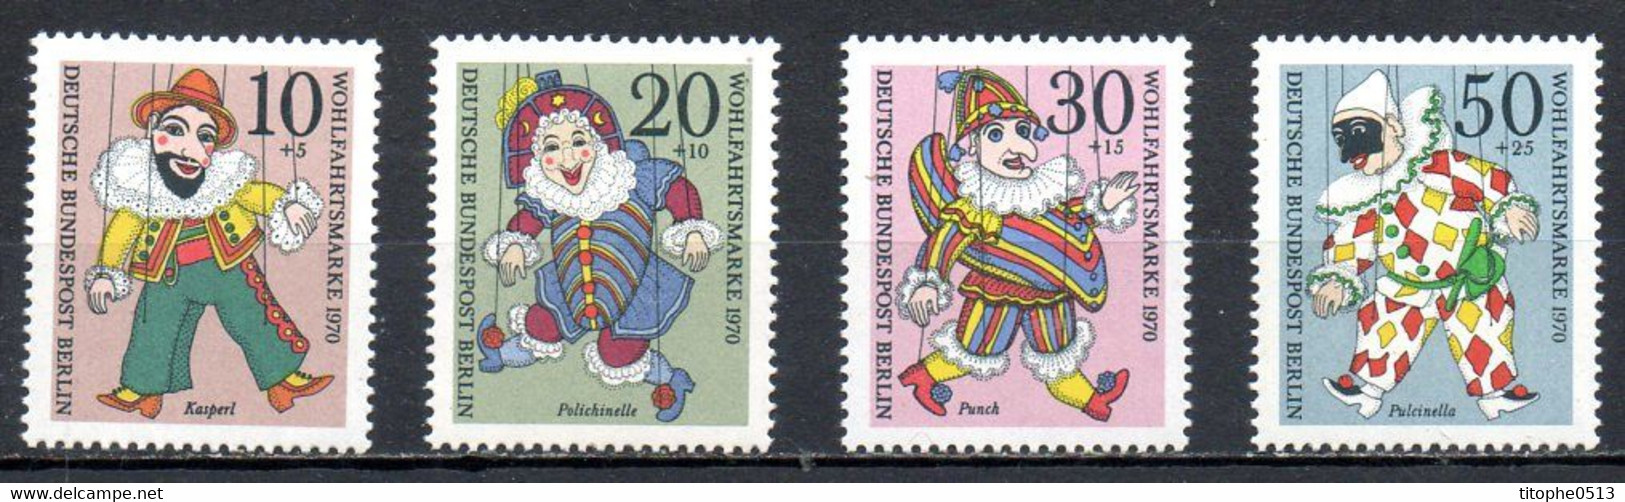 ALLEMAGNE BERLIN. N°335-8 De 1970. Marionnettes. - Marionnetten